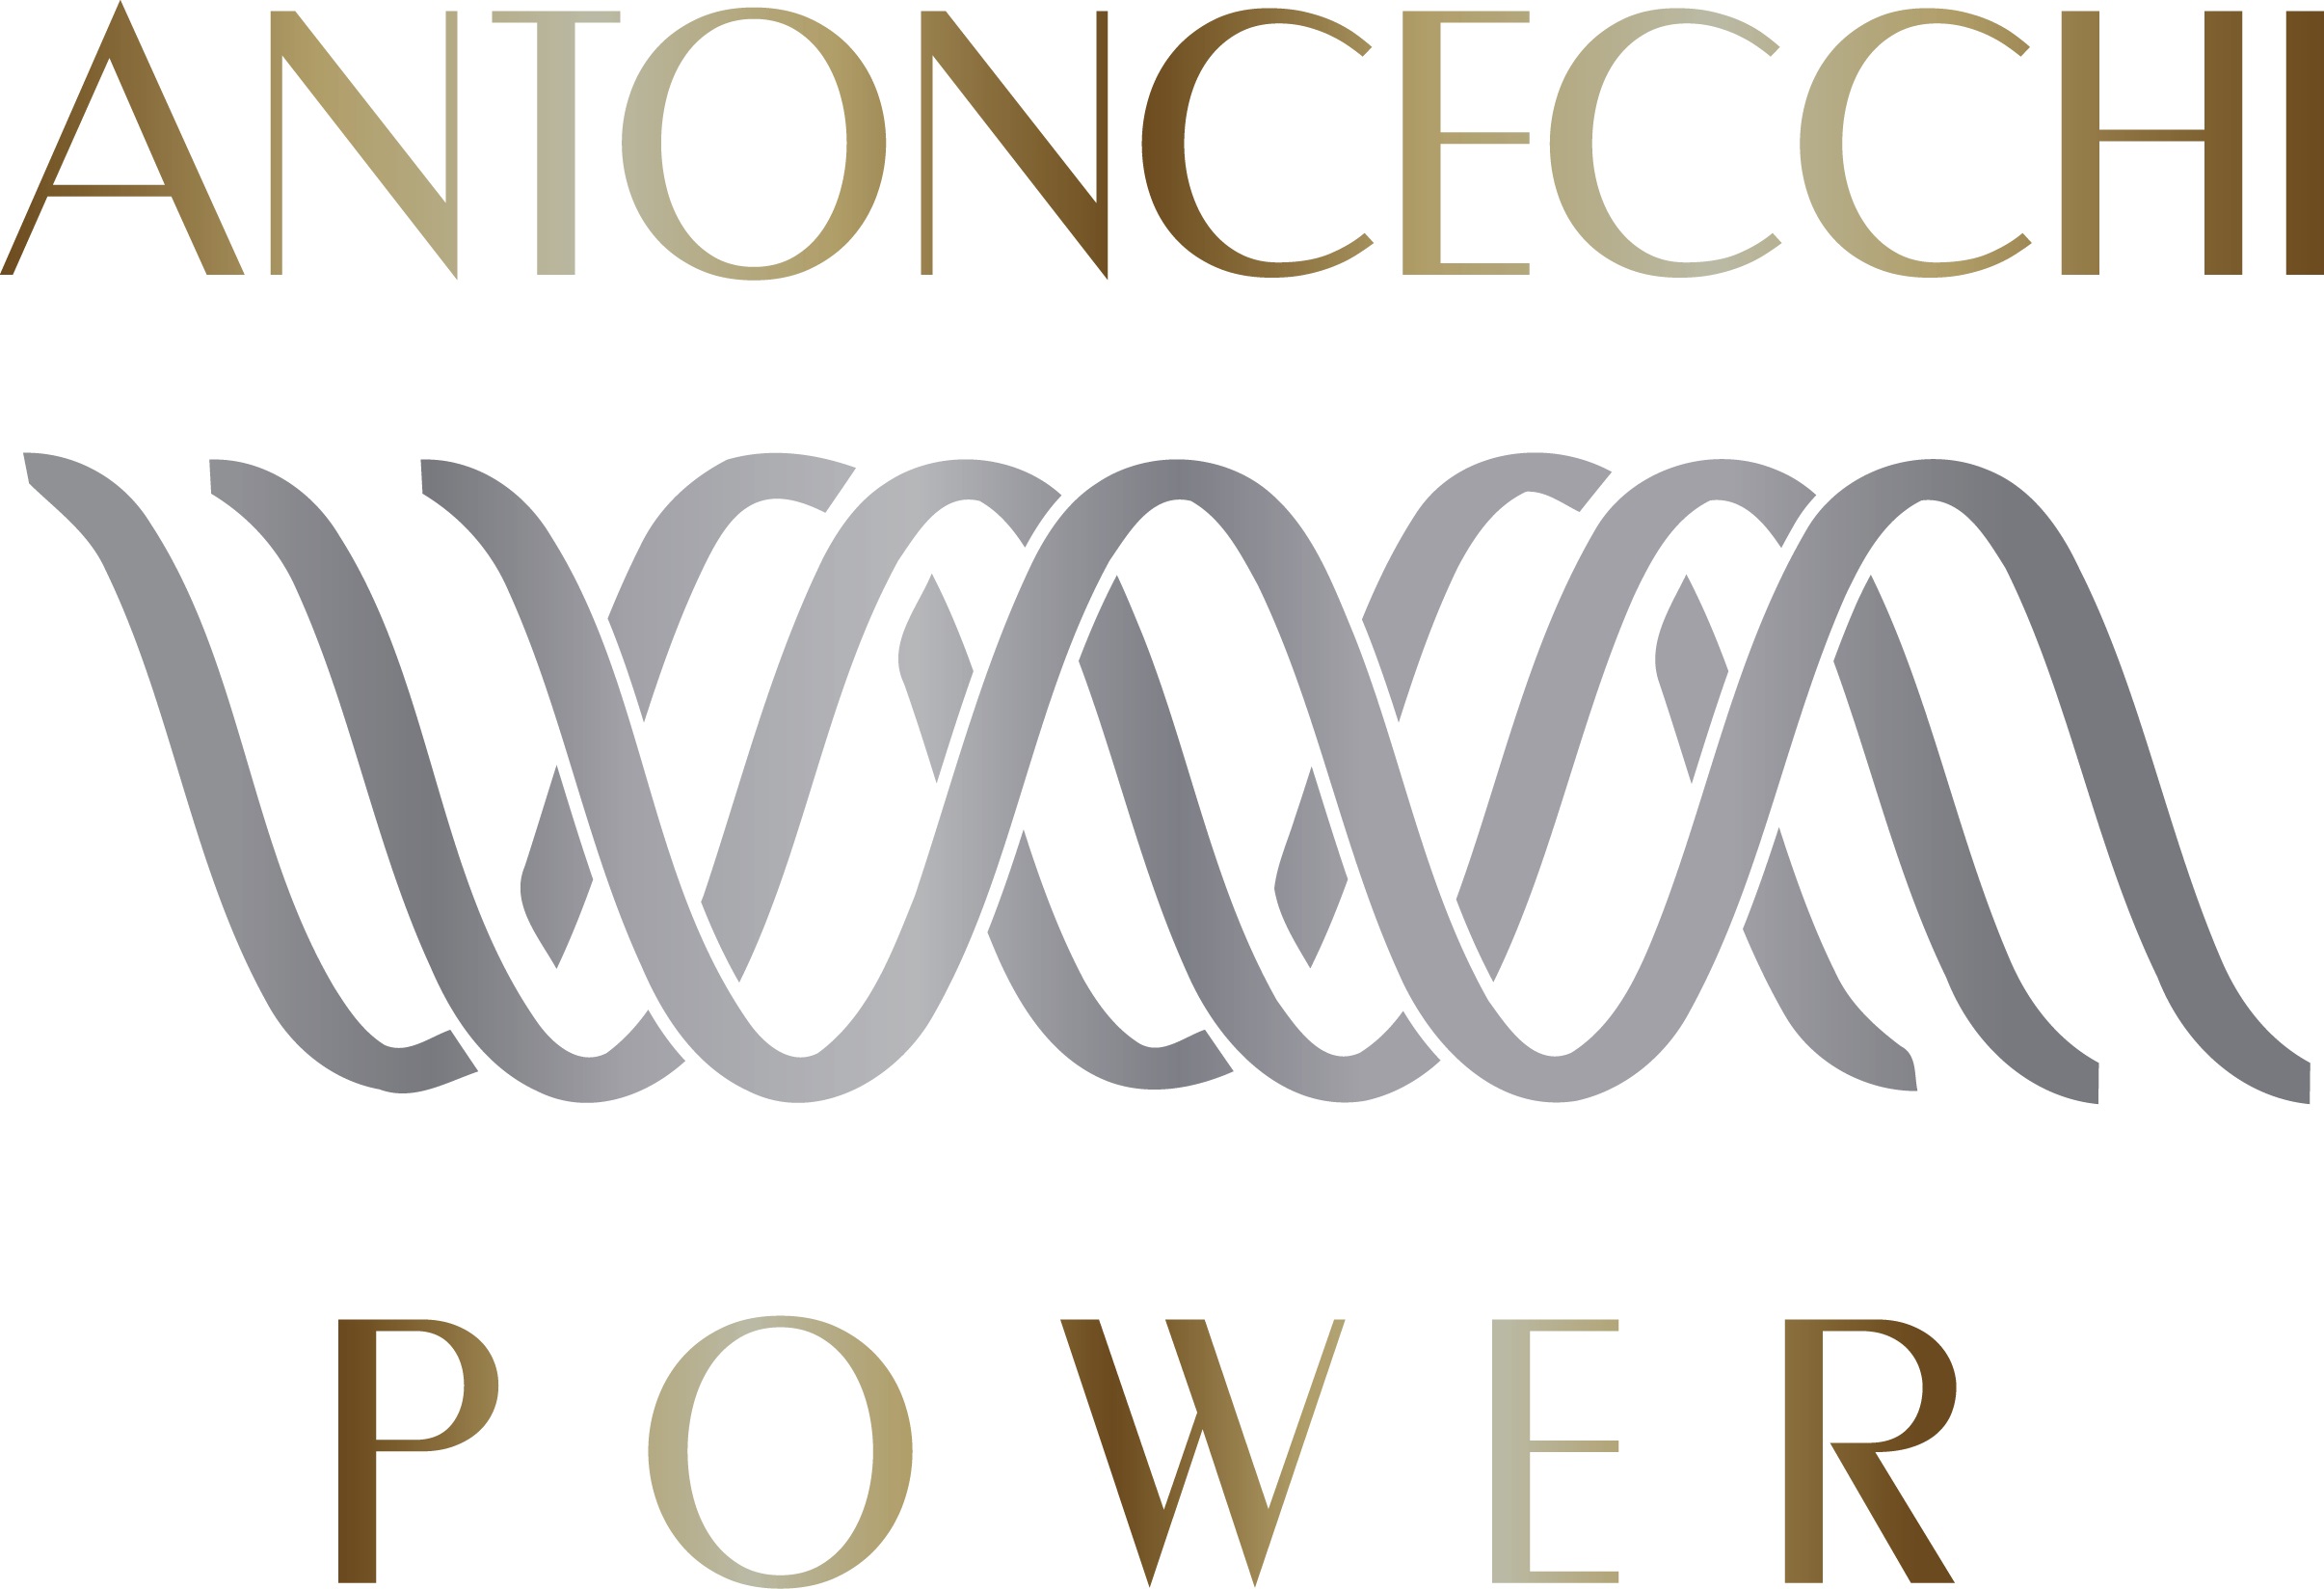 Antoncecchi Power LLC